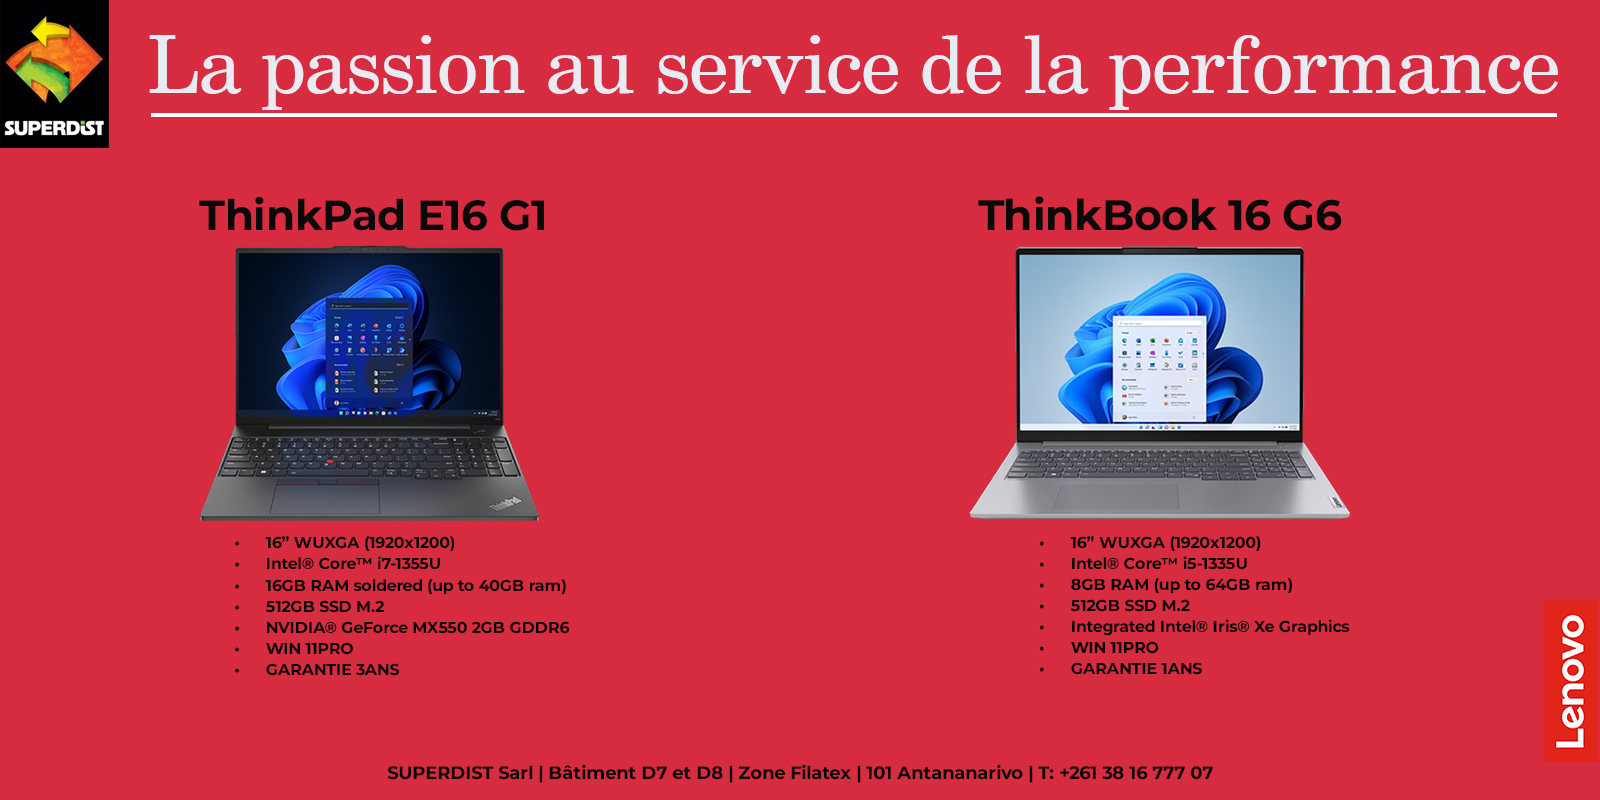 ThinkPad E16 G1 & ThinkBook 16 G6